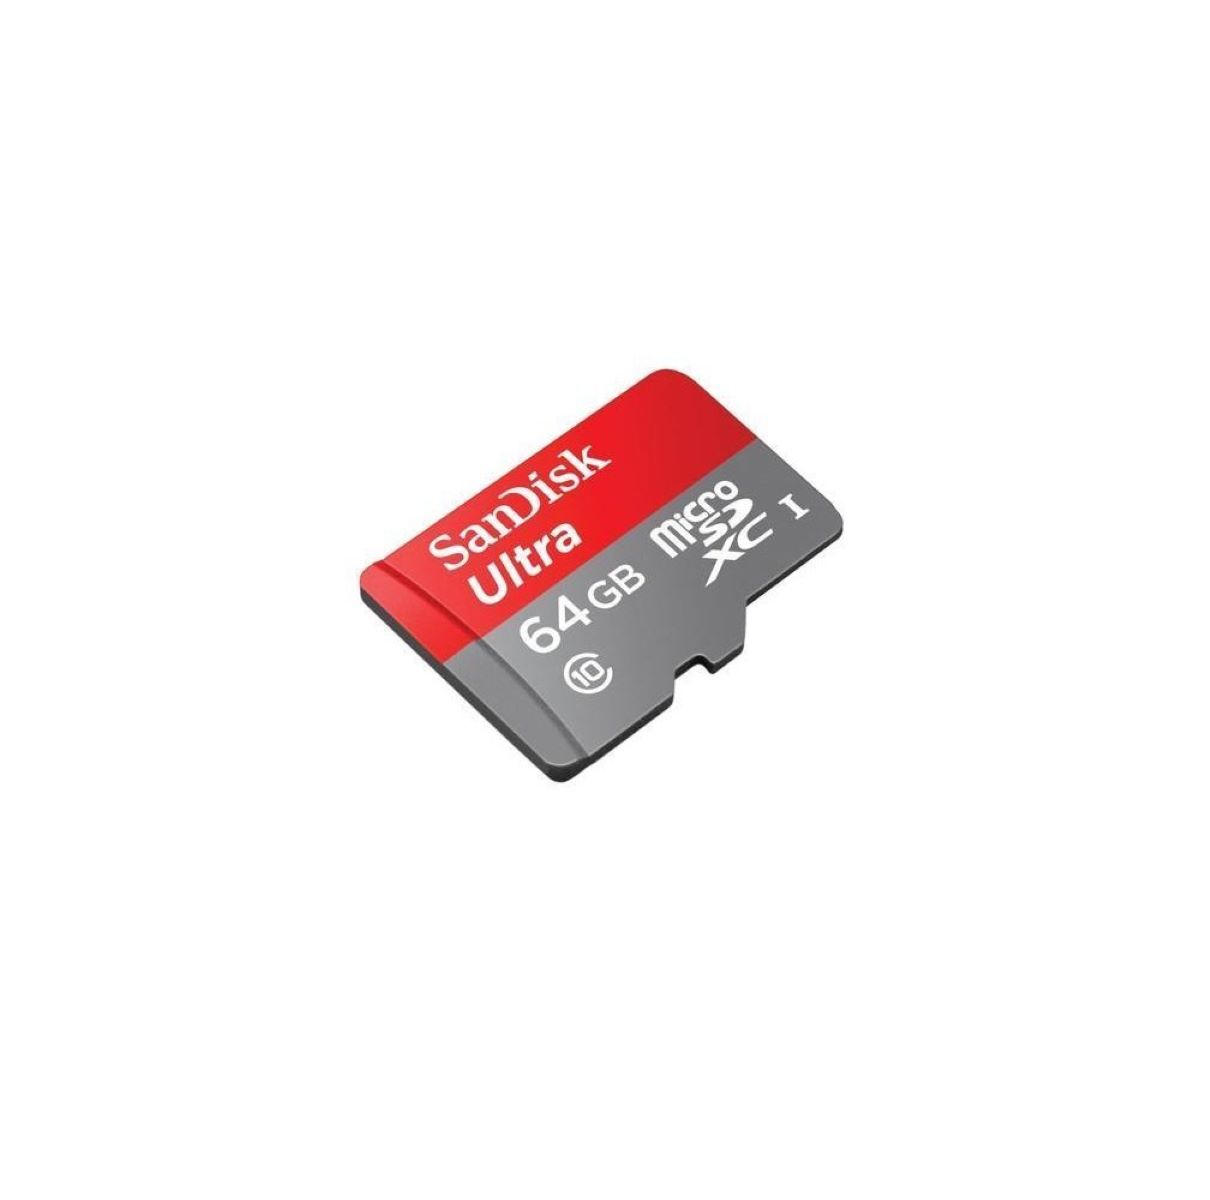 SanDisk Extreme Pro 256GB MicroSD XC Class 10 UHS-I Mobile Memory Card for  Go Pro Camera Hero 7 & 8 with USB 3.0 MemoryMarket Dual Slot MicroSD & SD